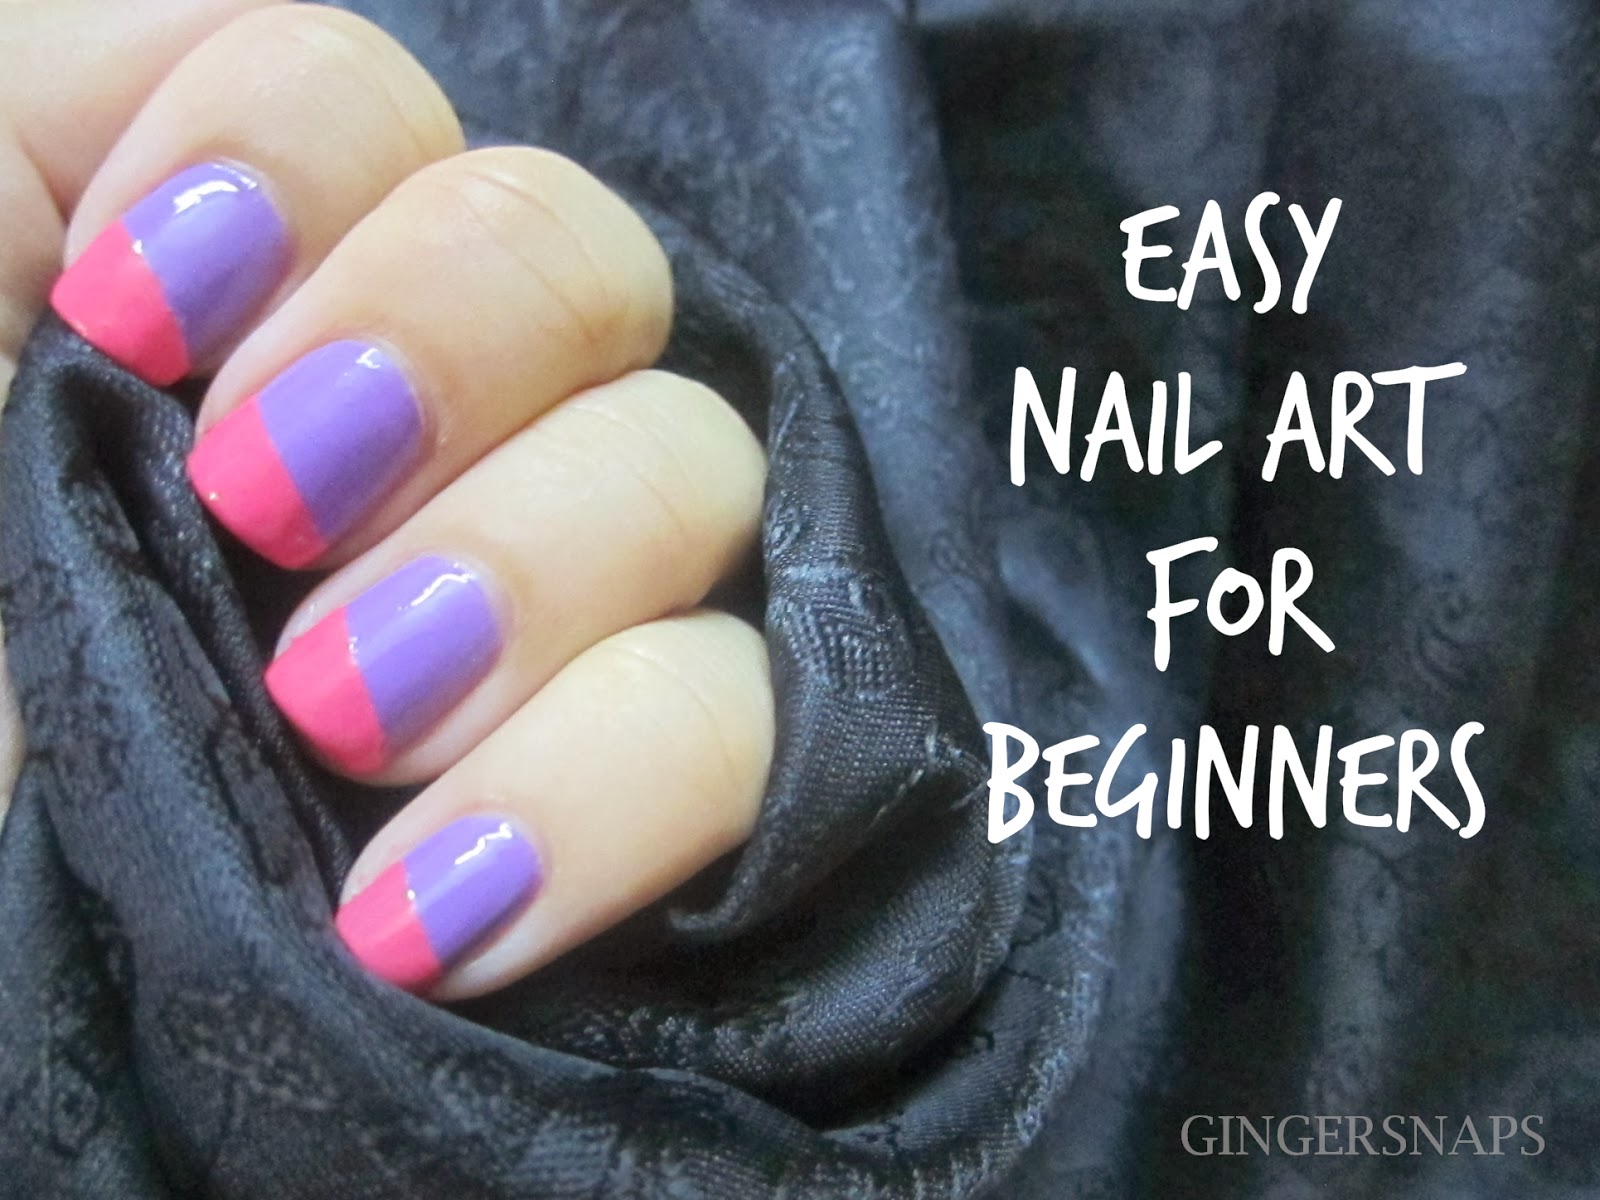 1. Easy DIY Nail Art Designs for Beginners - wide 2